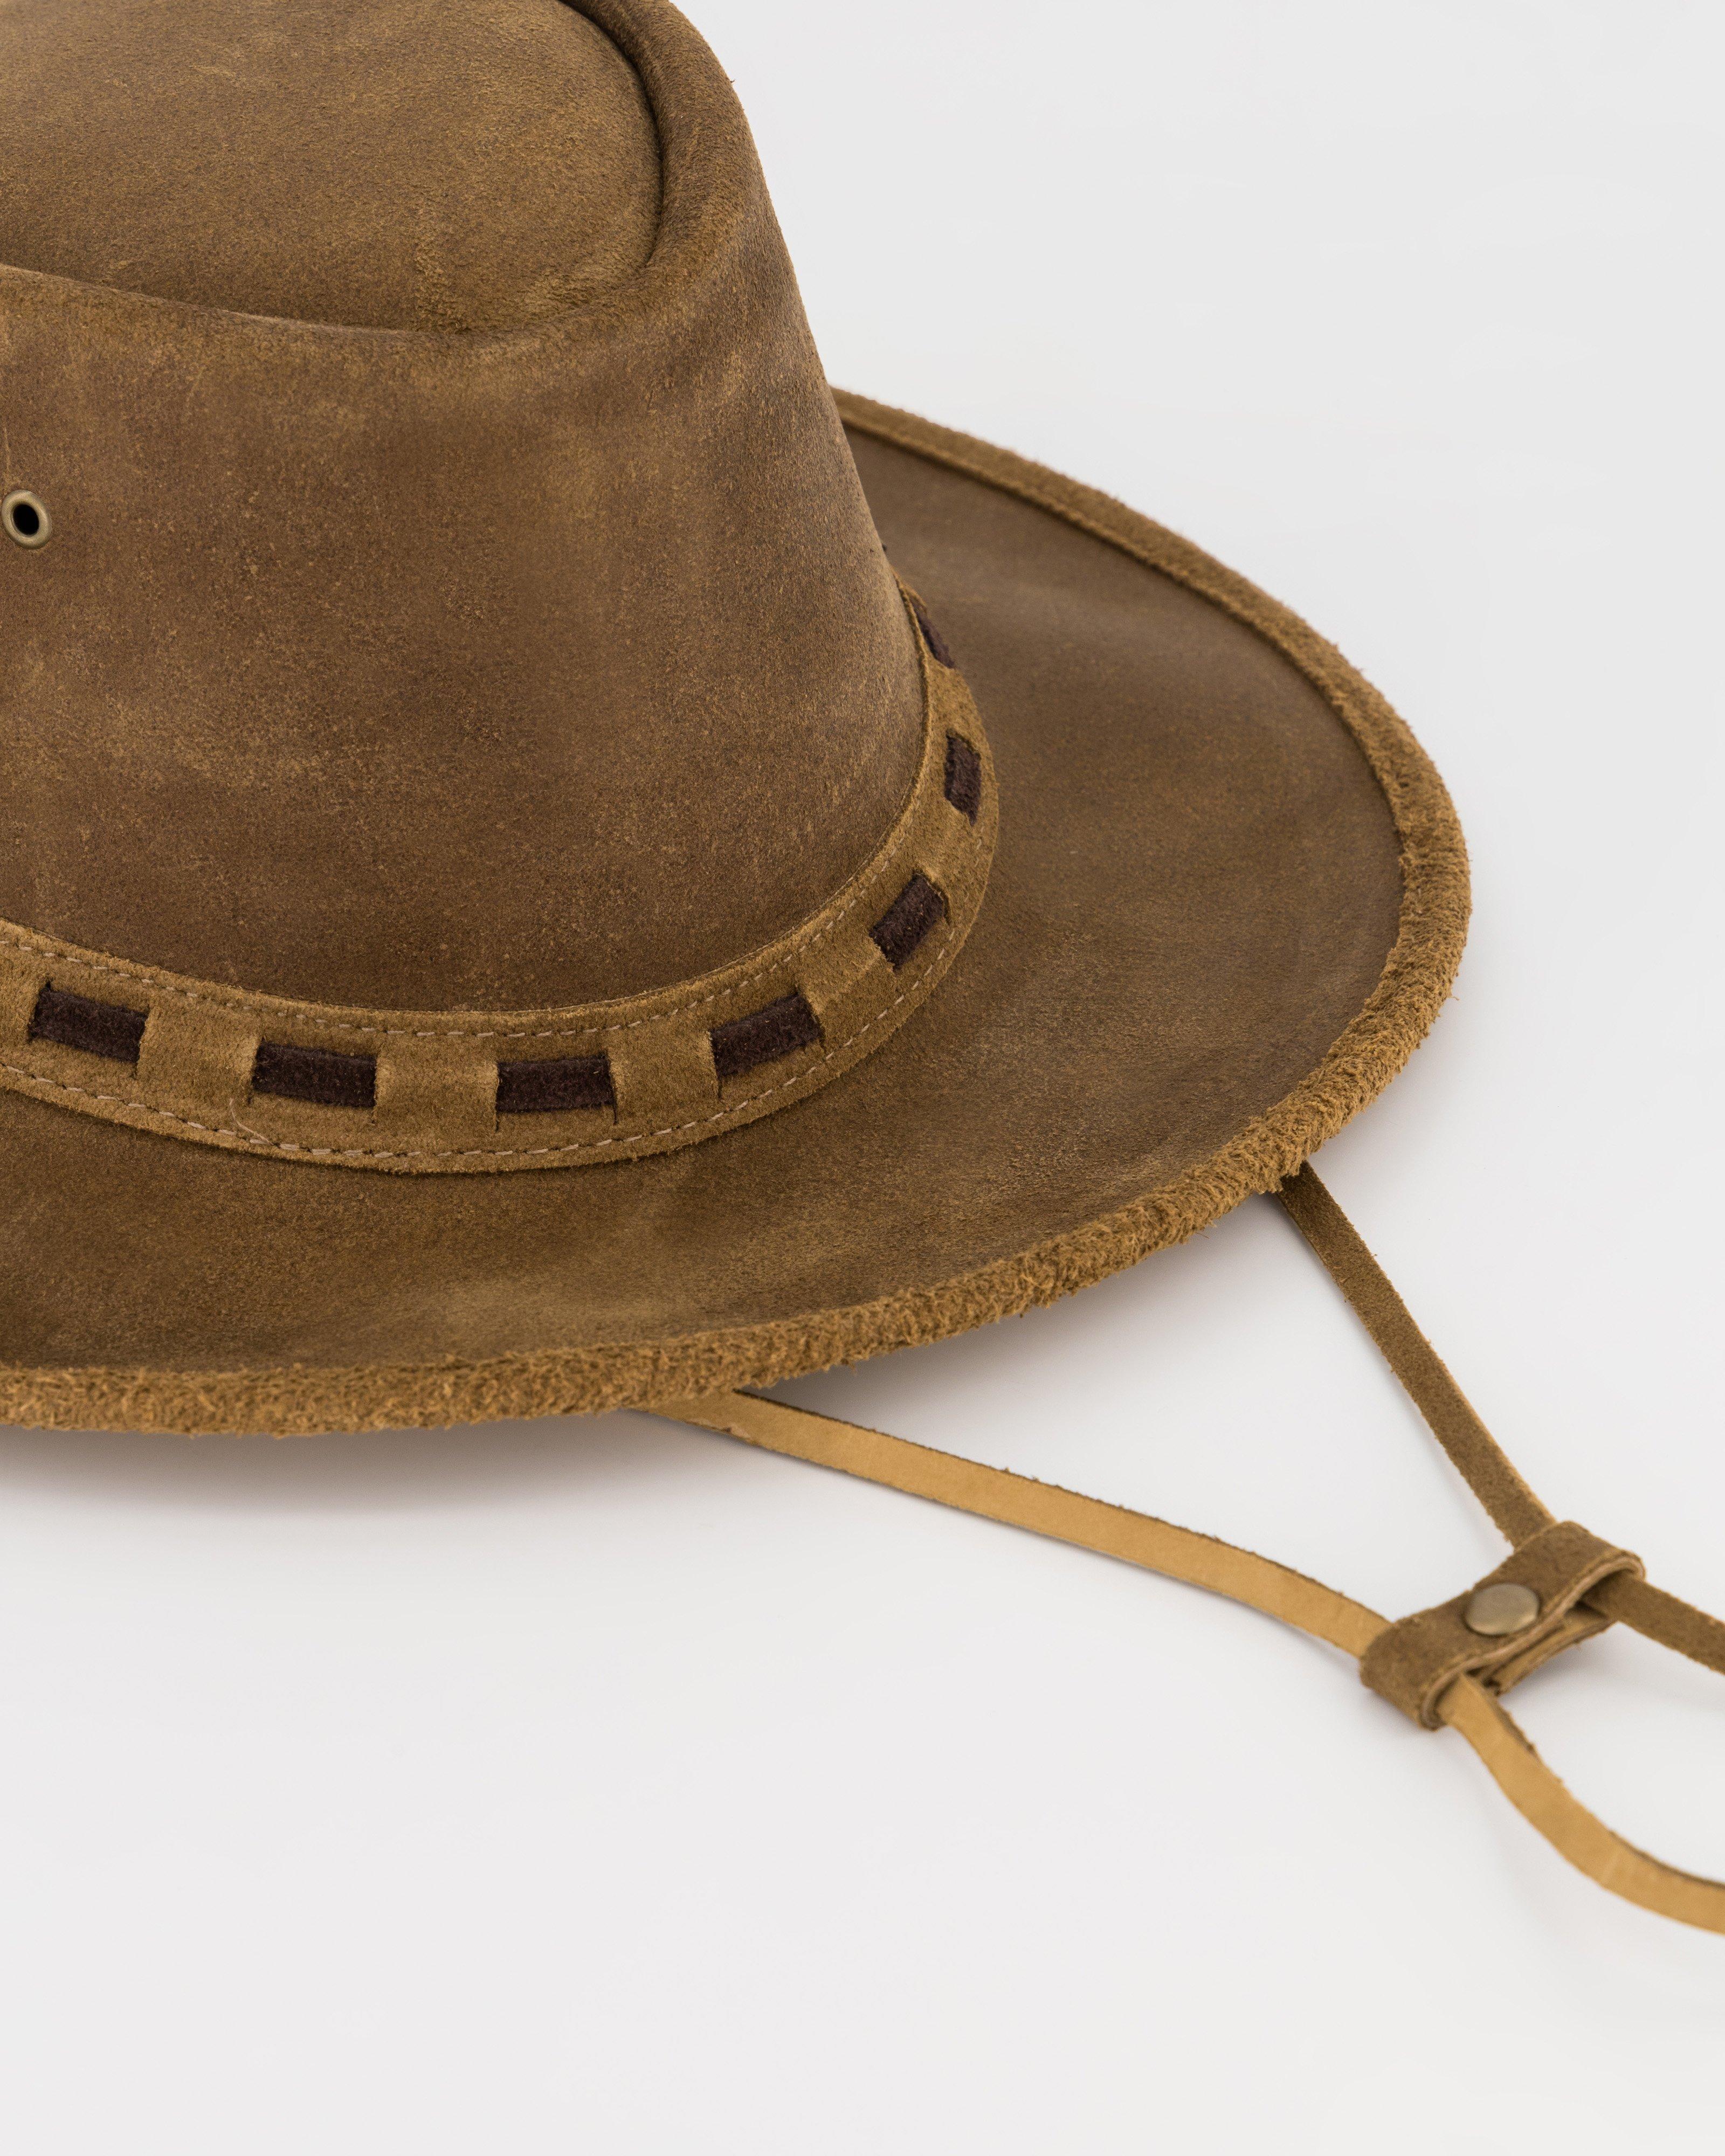 Sullivan Leather Hat -  Brown